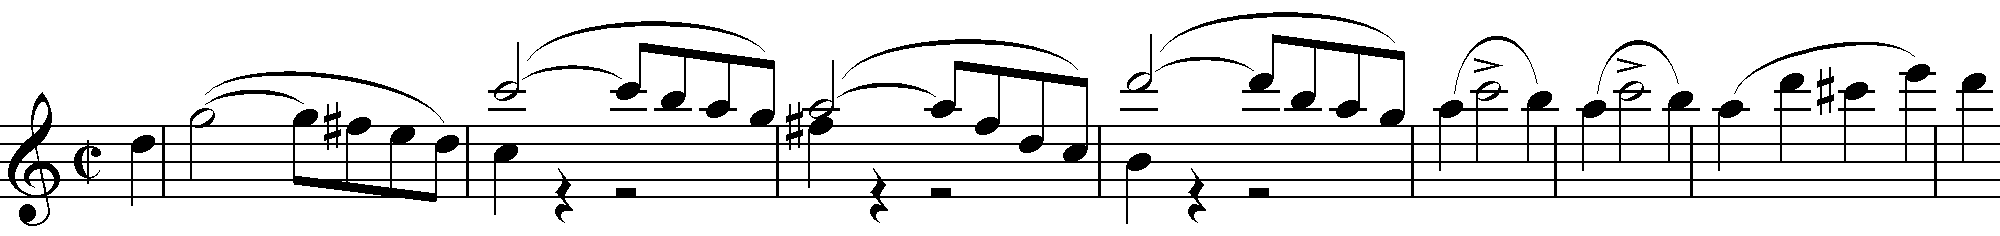 Beethoven1-1-Thema2